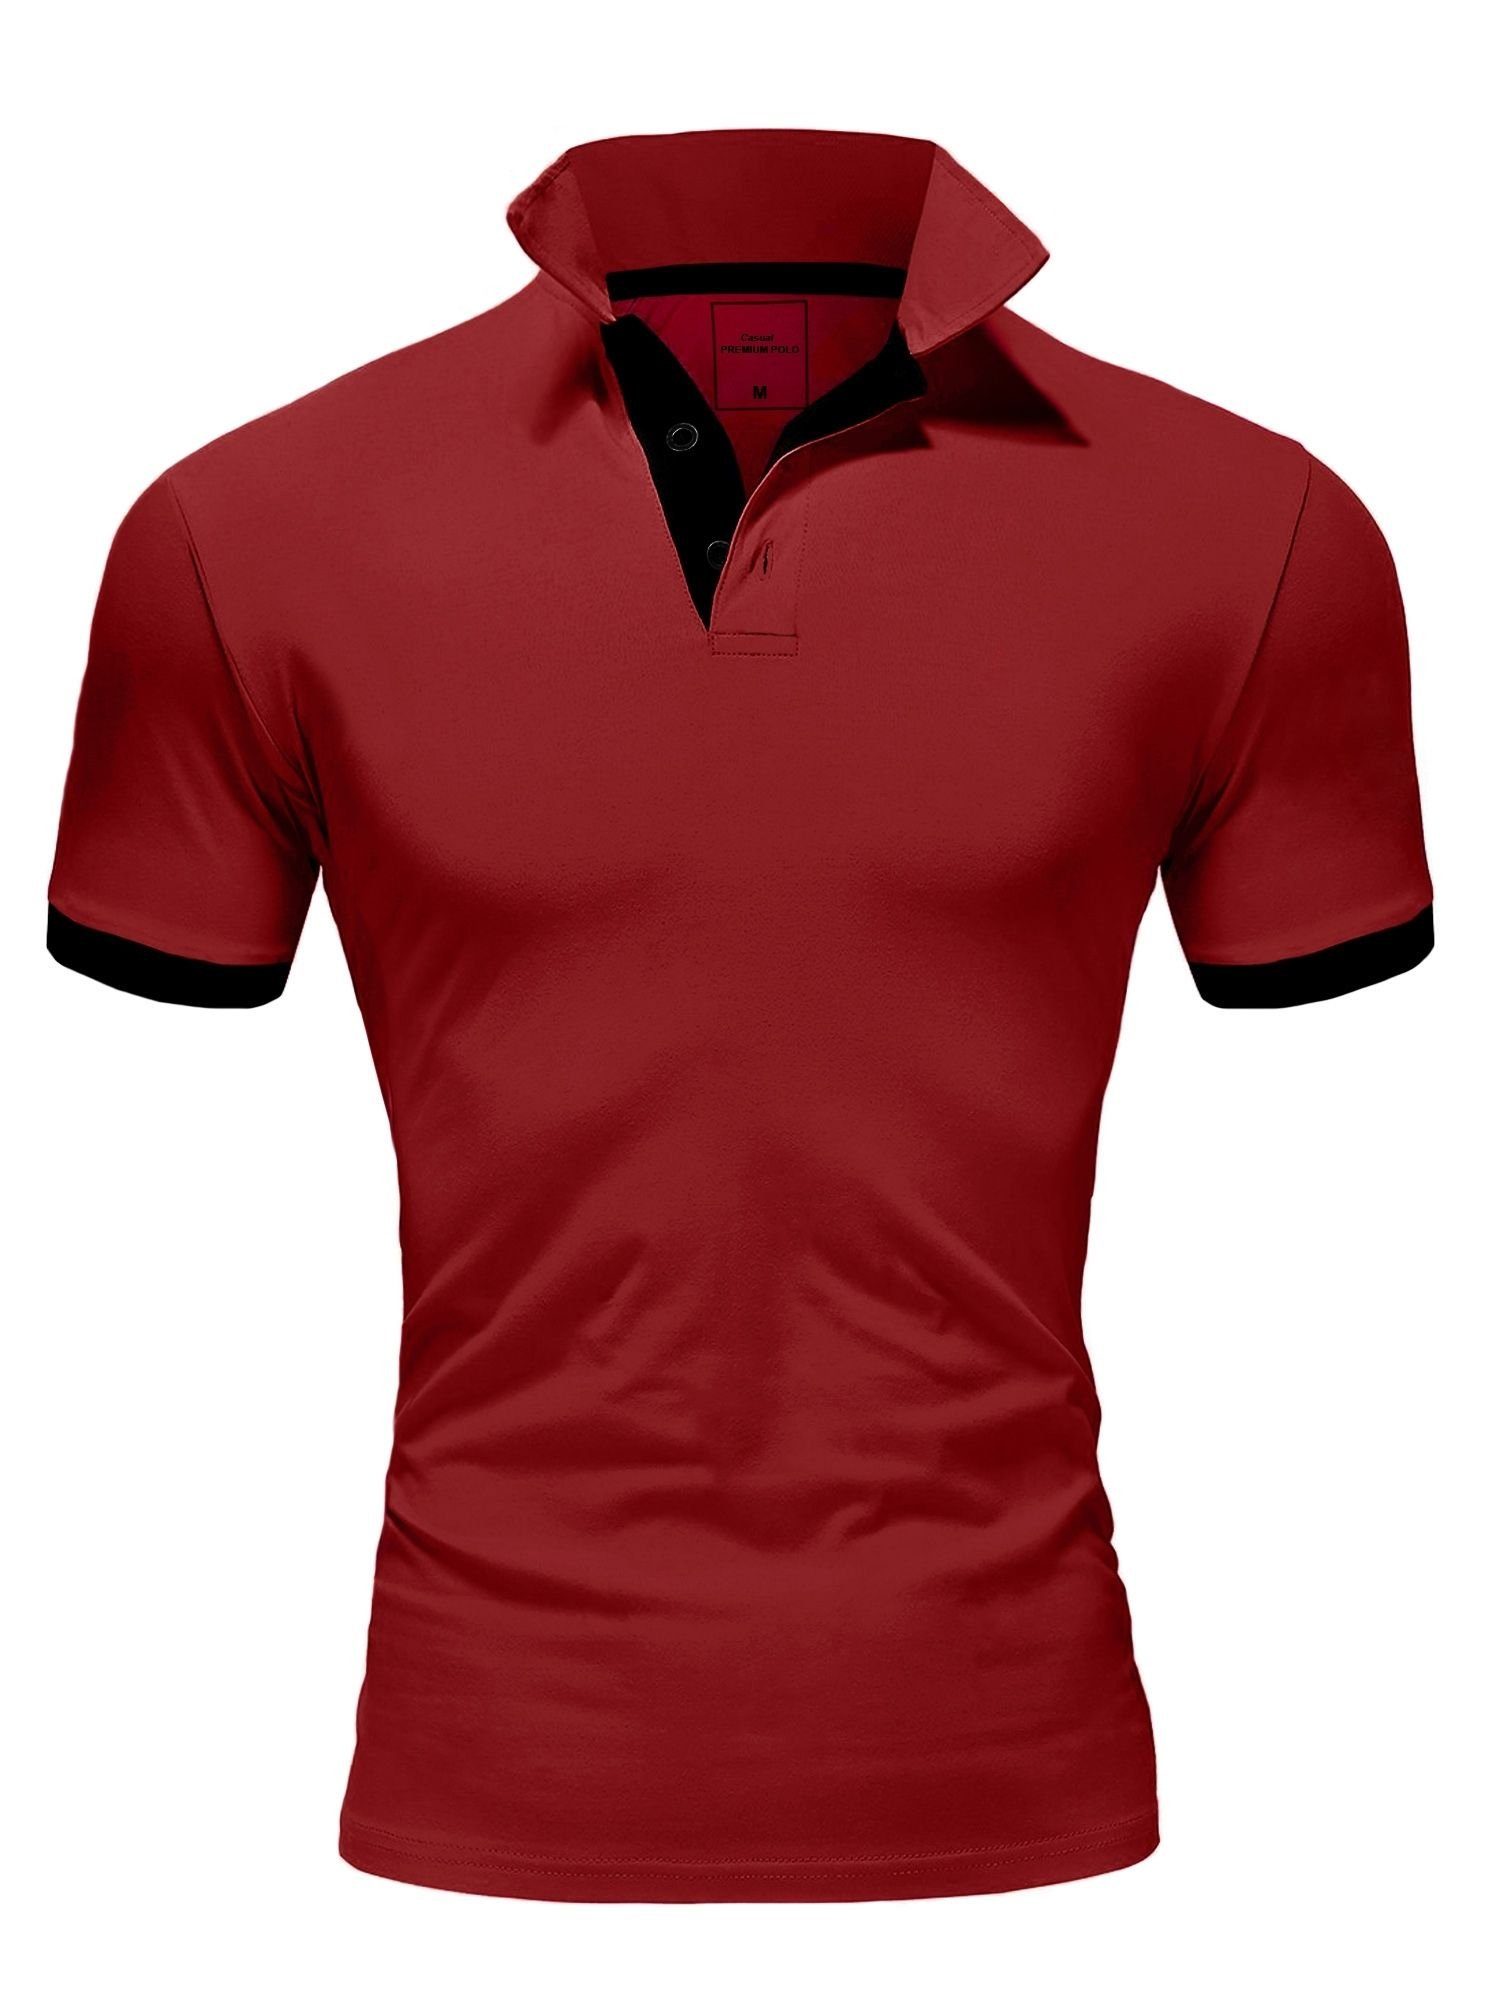 behype Poloshirt BASE mit kontrastfarbigen Details weinrot